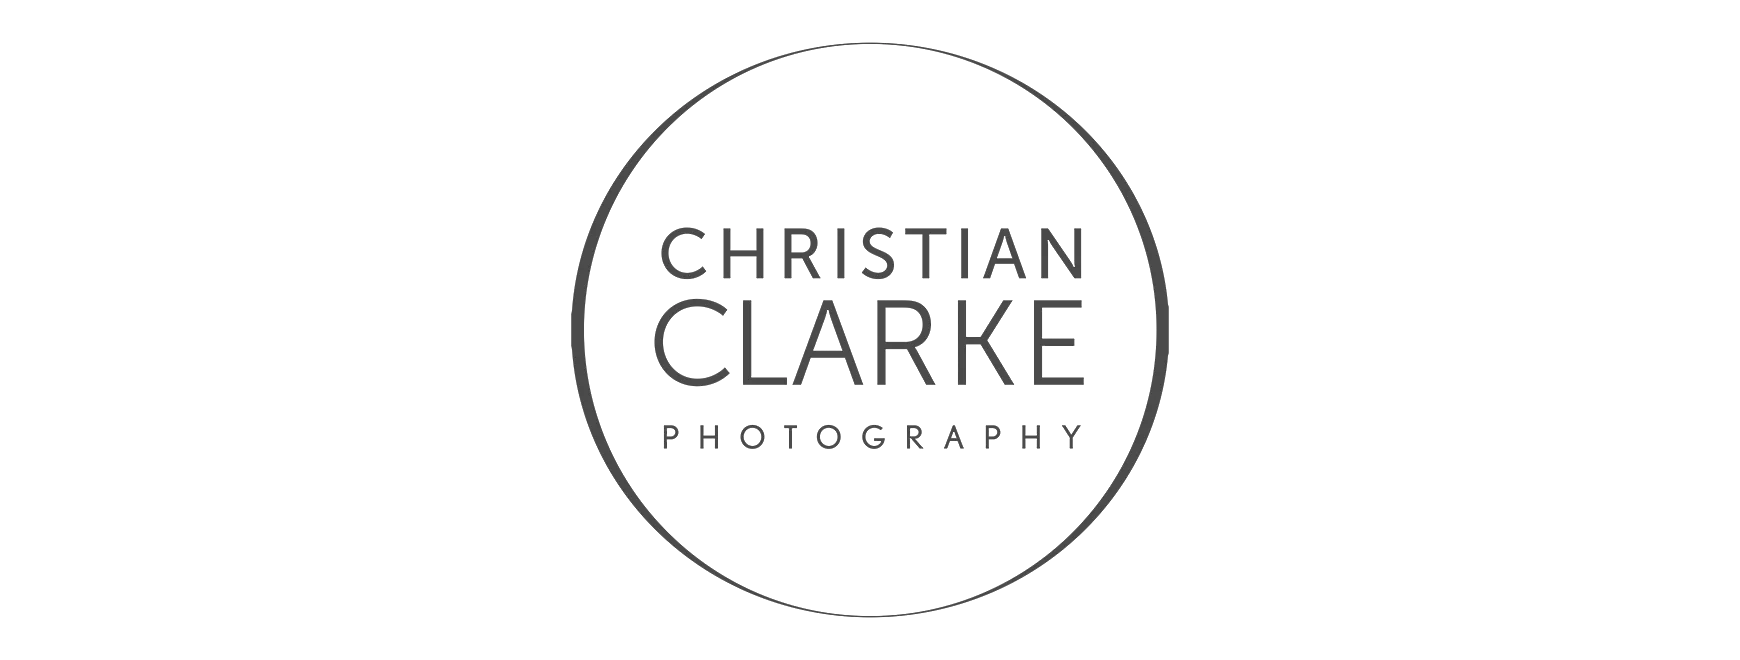 ChristianClarke-logos2020